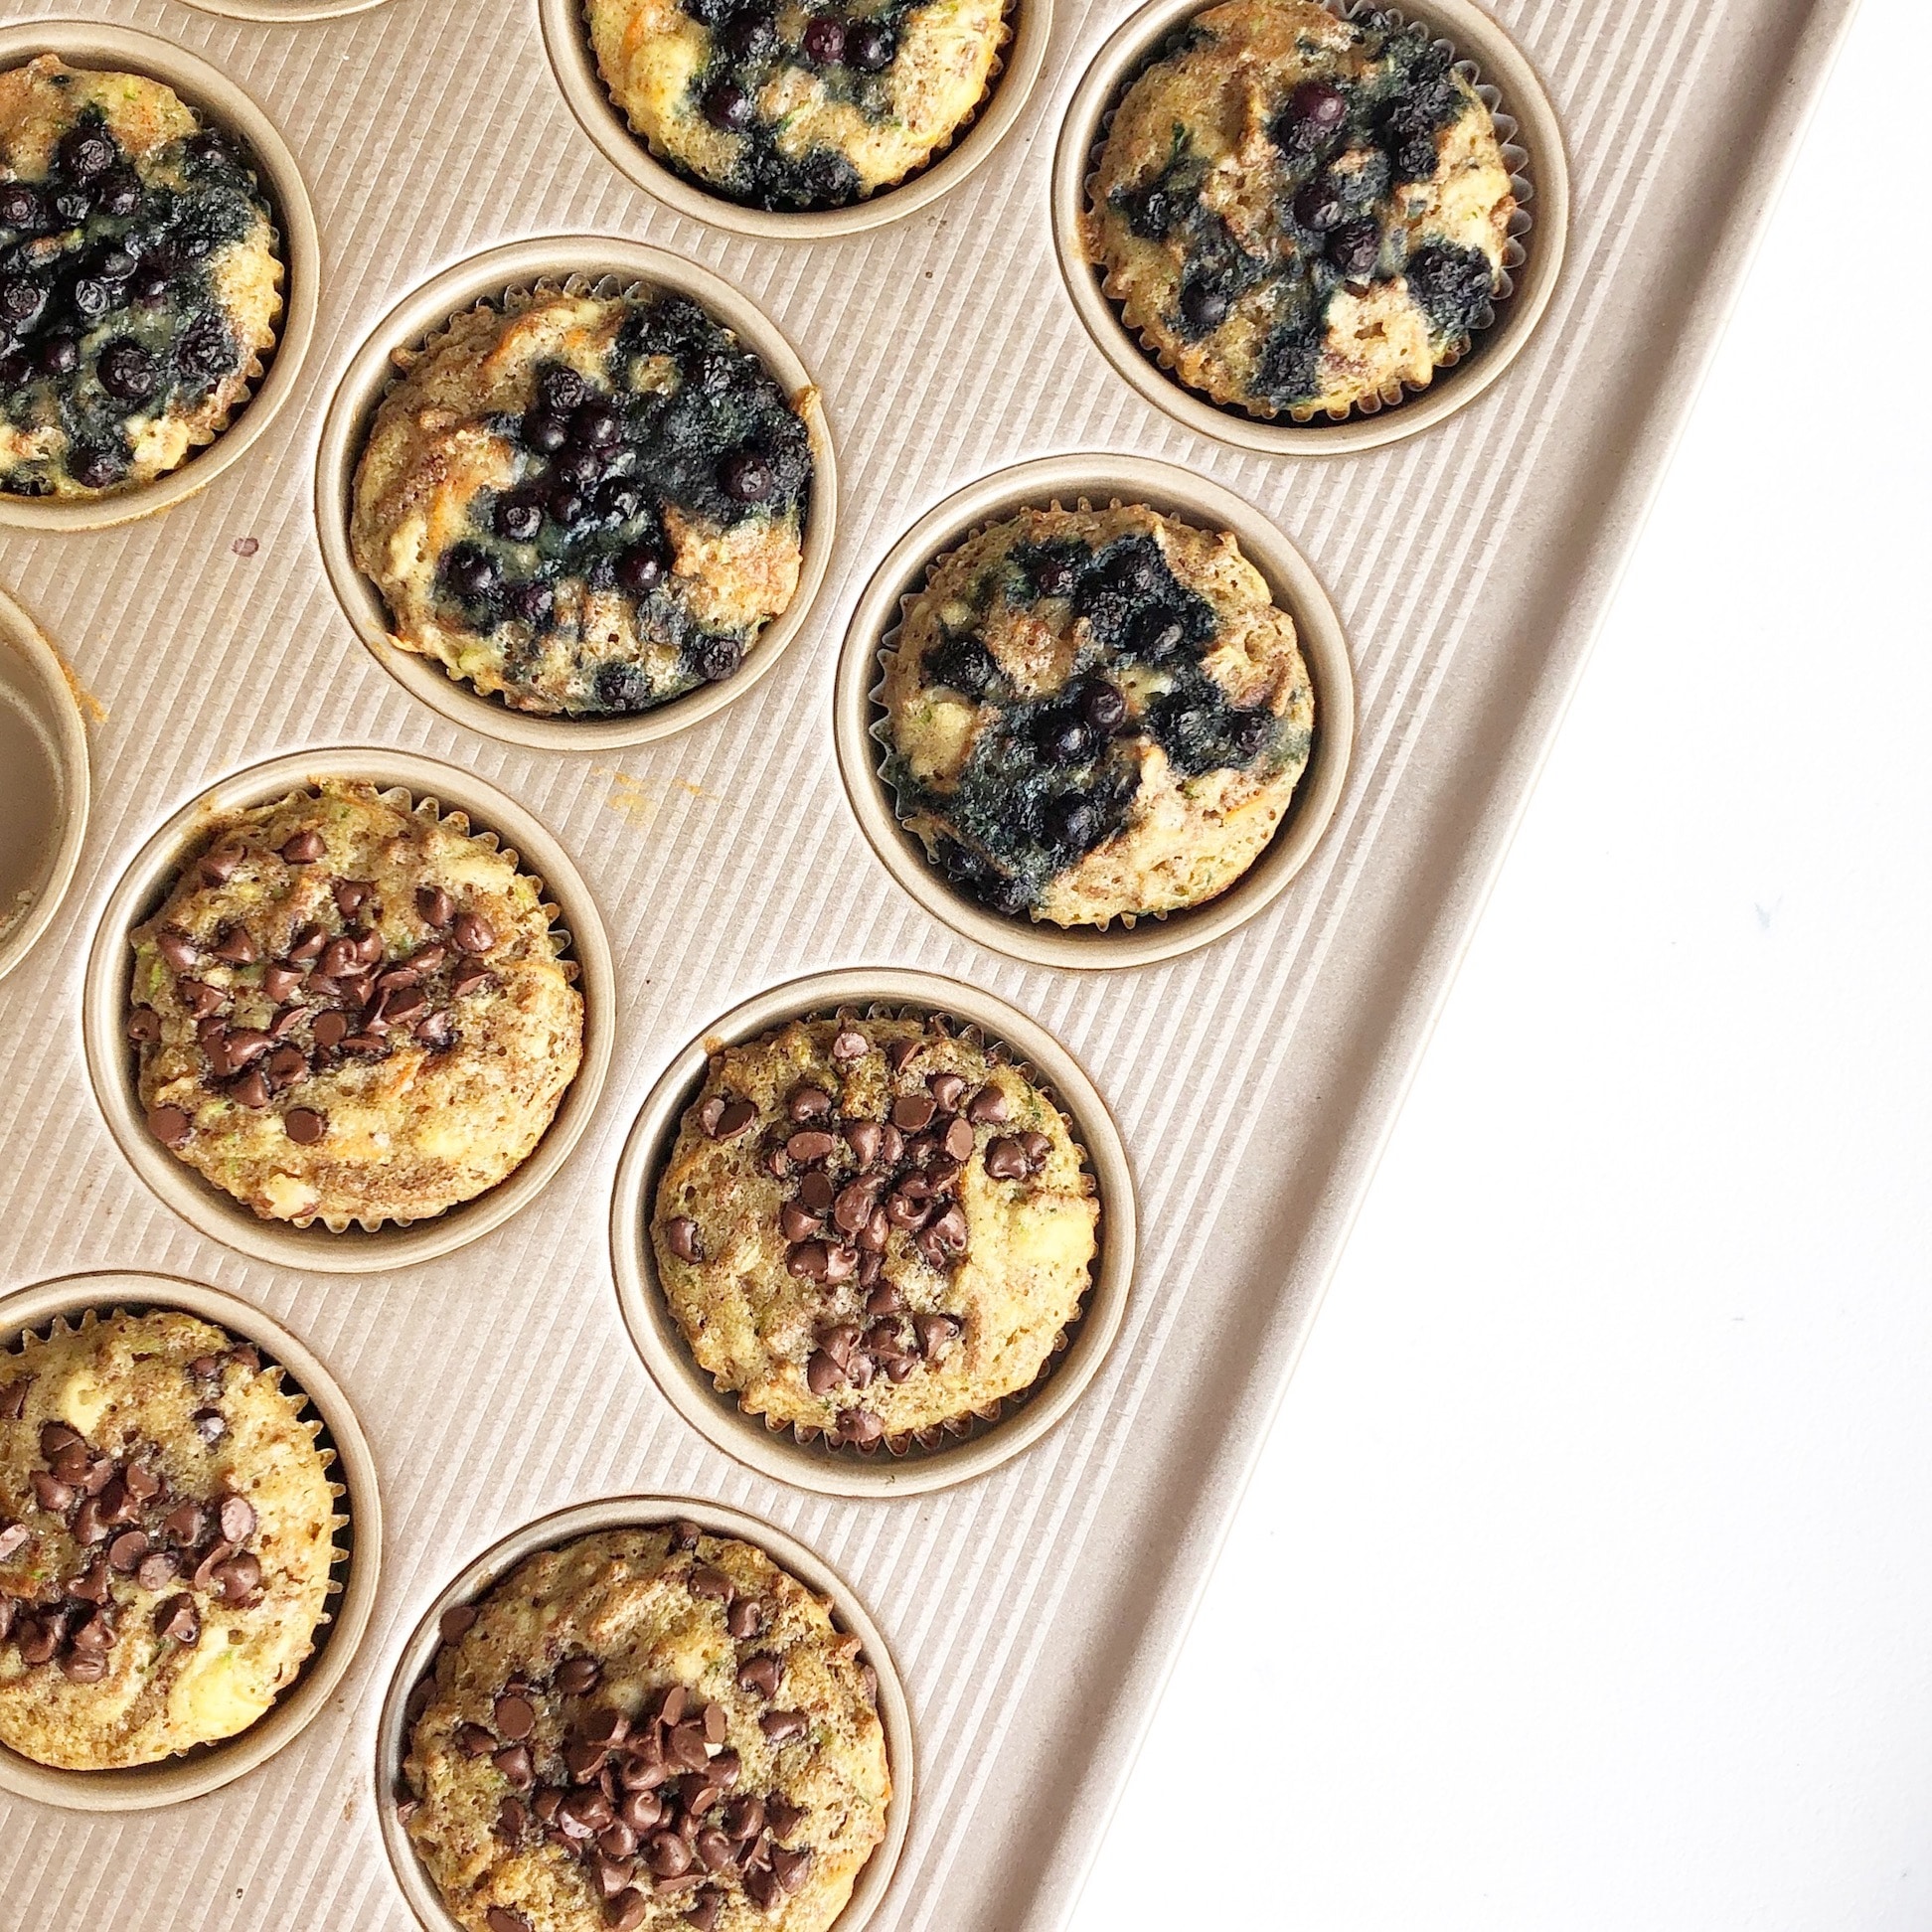 Make Ahead Breakfast Ideas: Healthy Bran Muffins